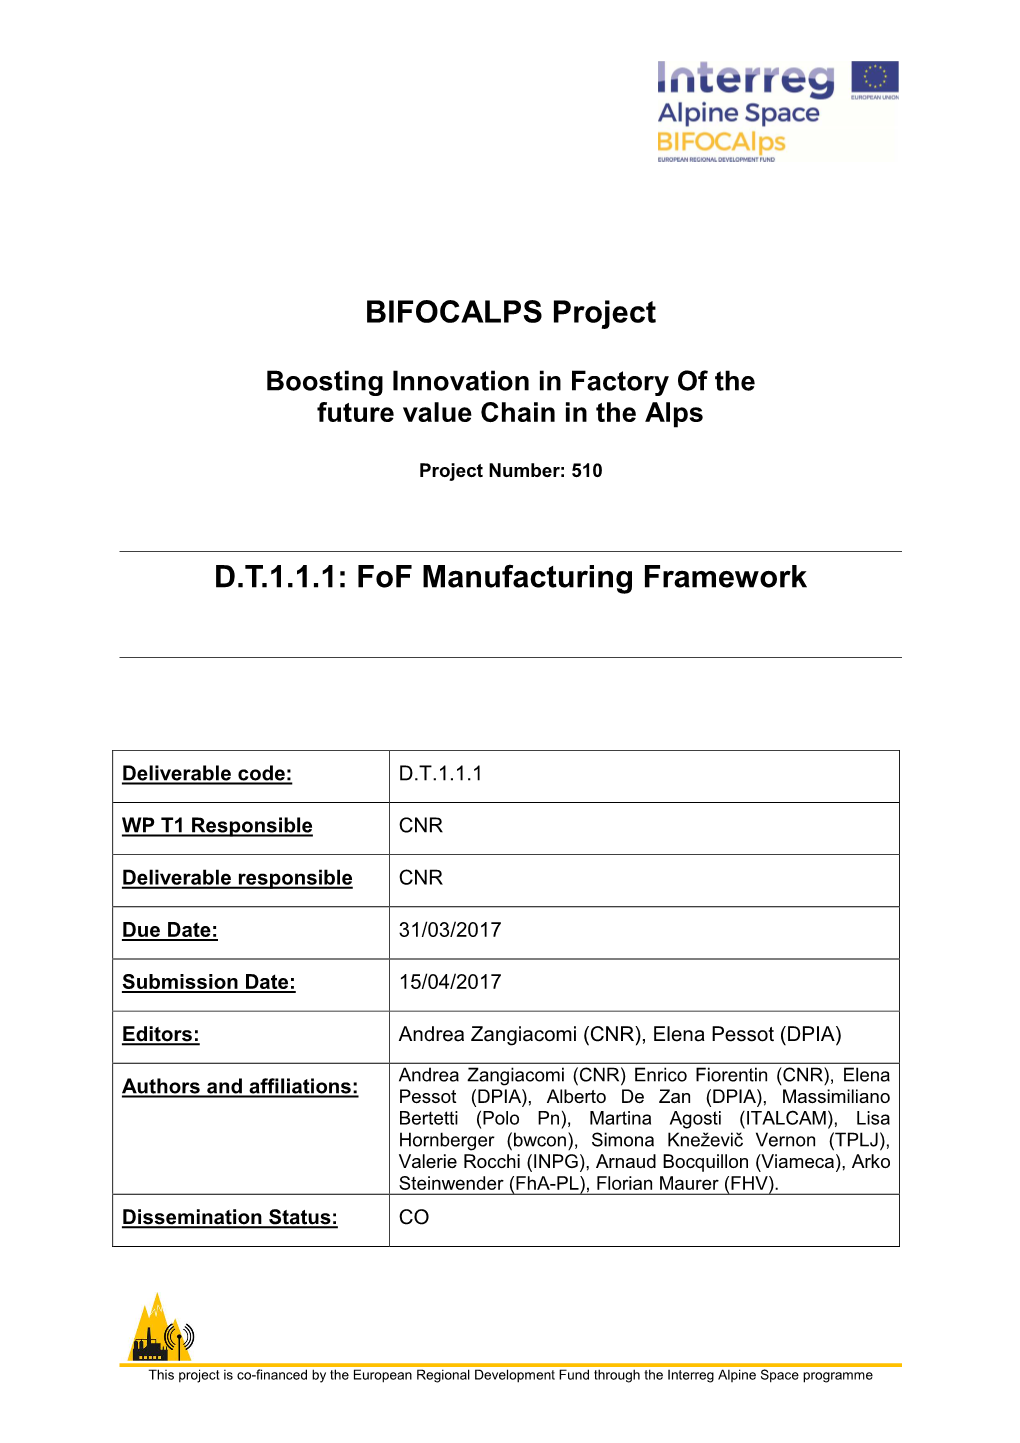 BIFOCALPS Project D.T.1.1.1: Fof Manufacturing Framework